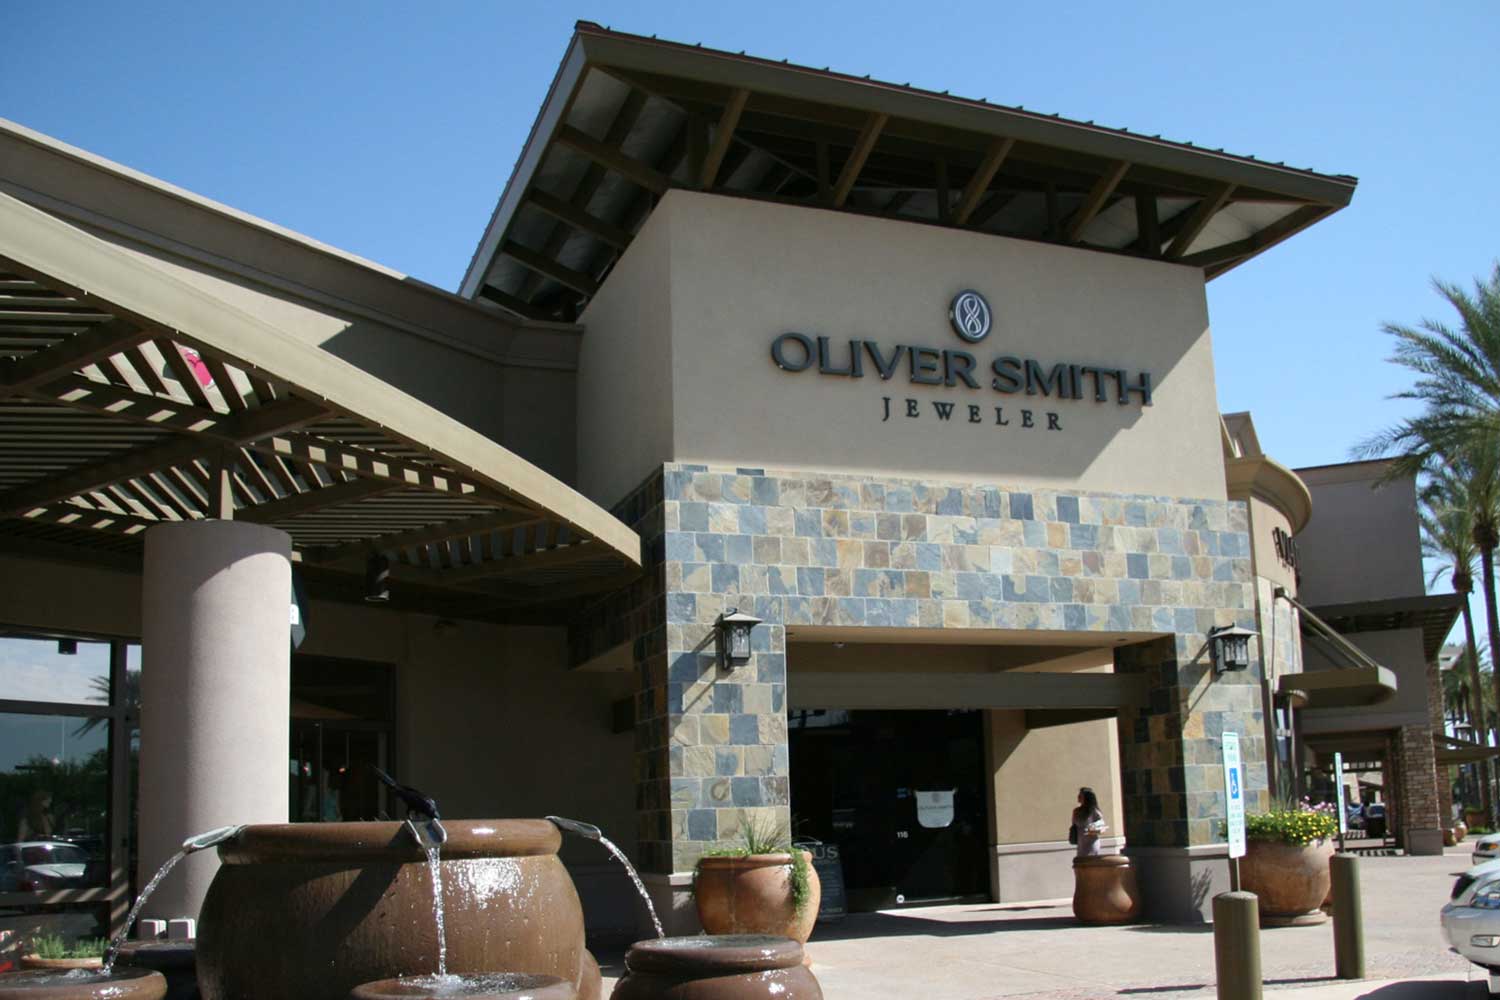 Oliver Smith Jeweler in Scottsdale Arizona